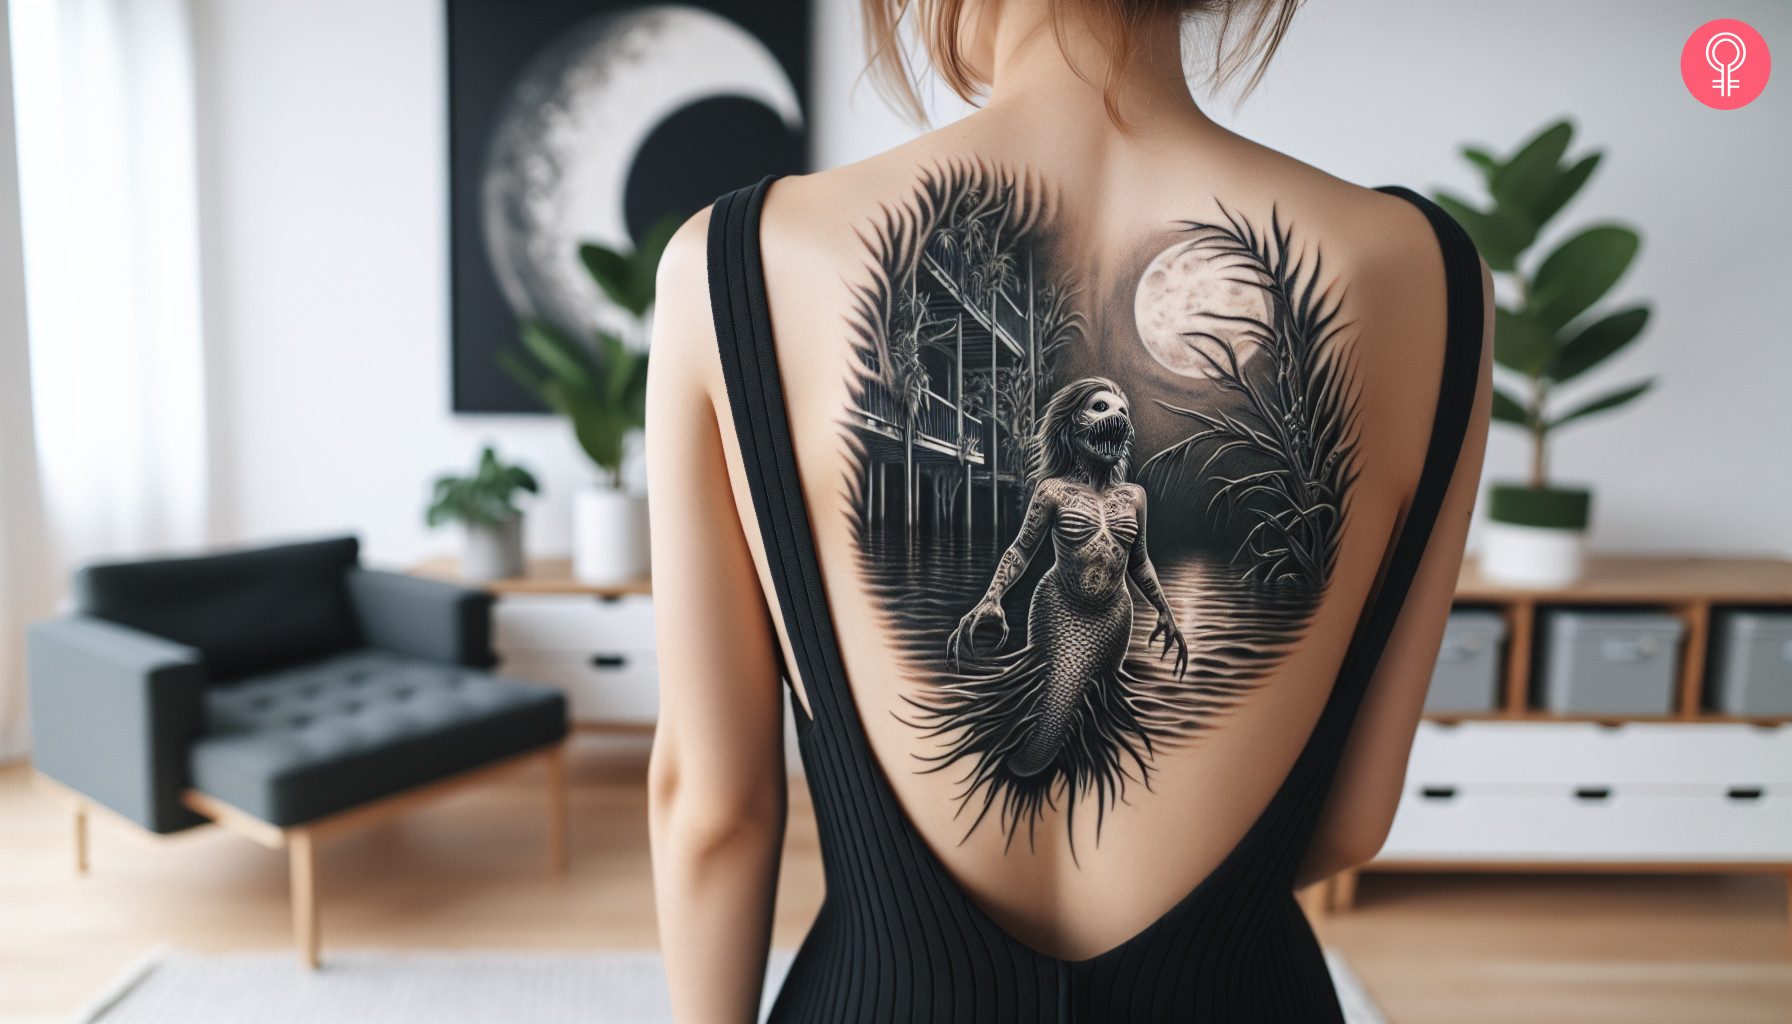 A dark fantasy tattoo on the back featuring a mermaid